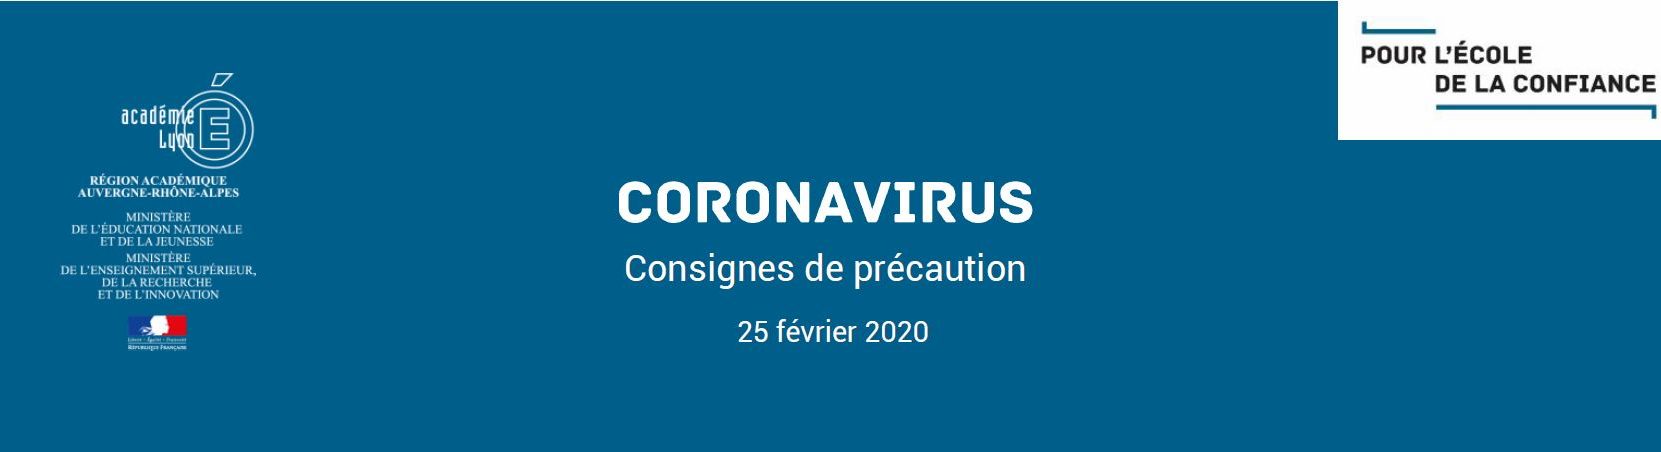 Bandeau Coronavirus 250220.JPG